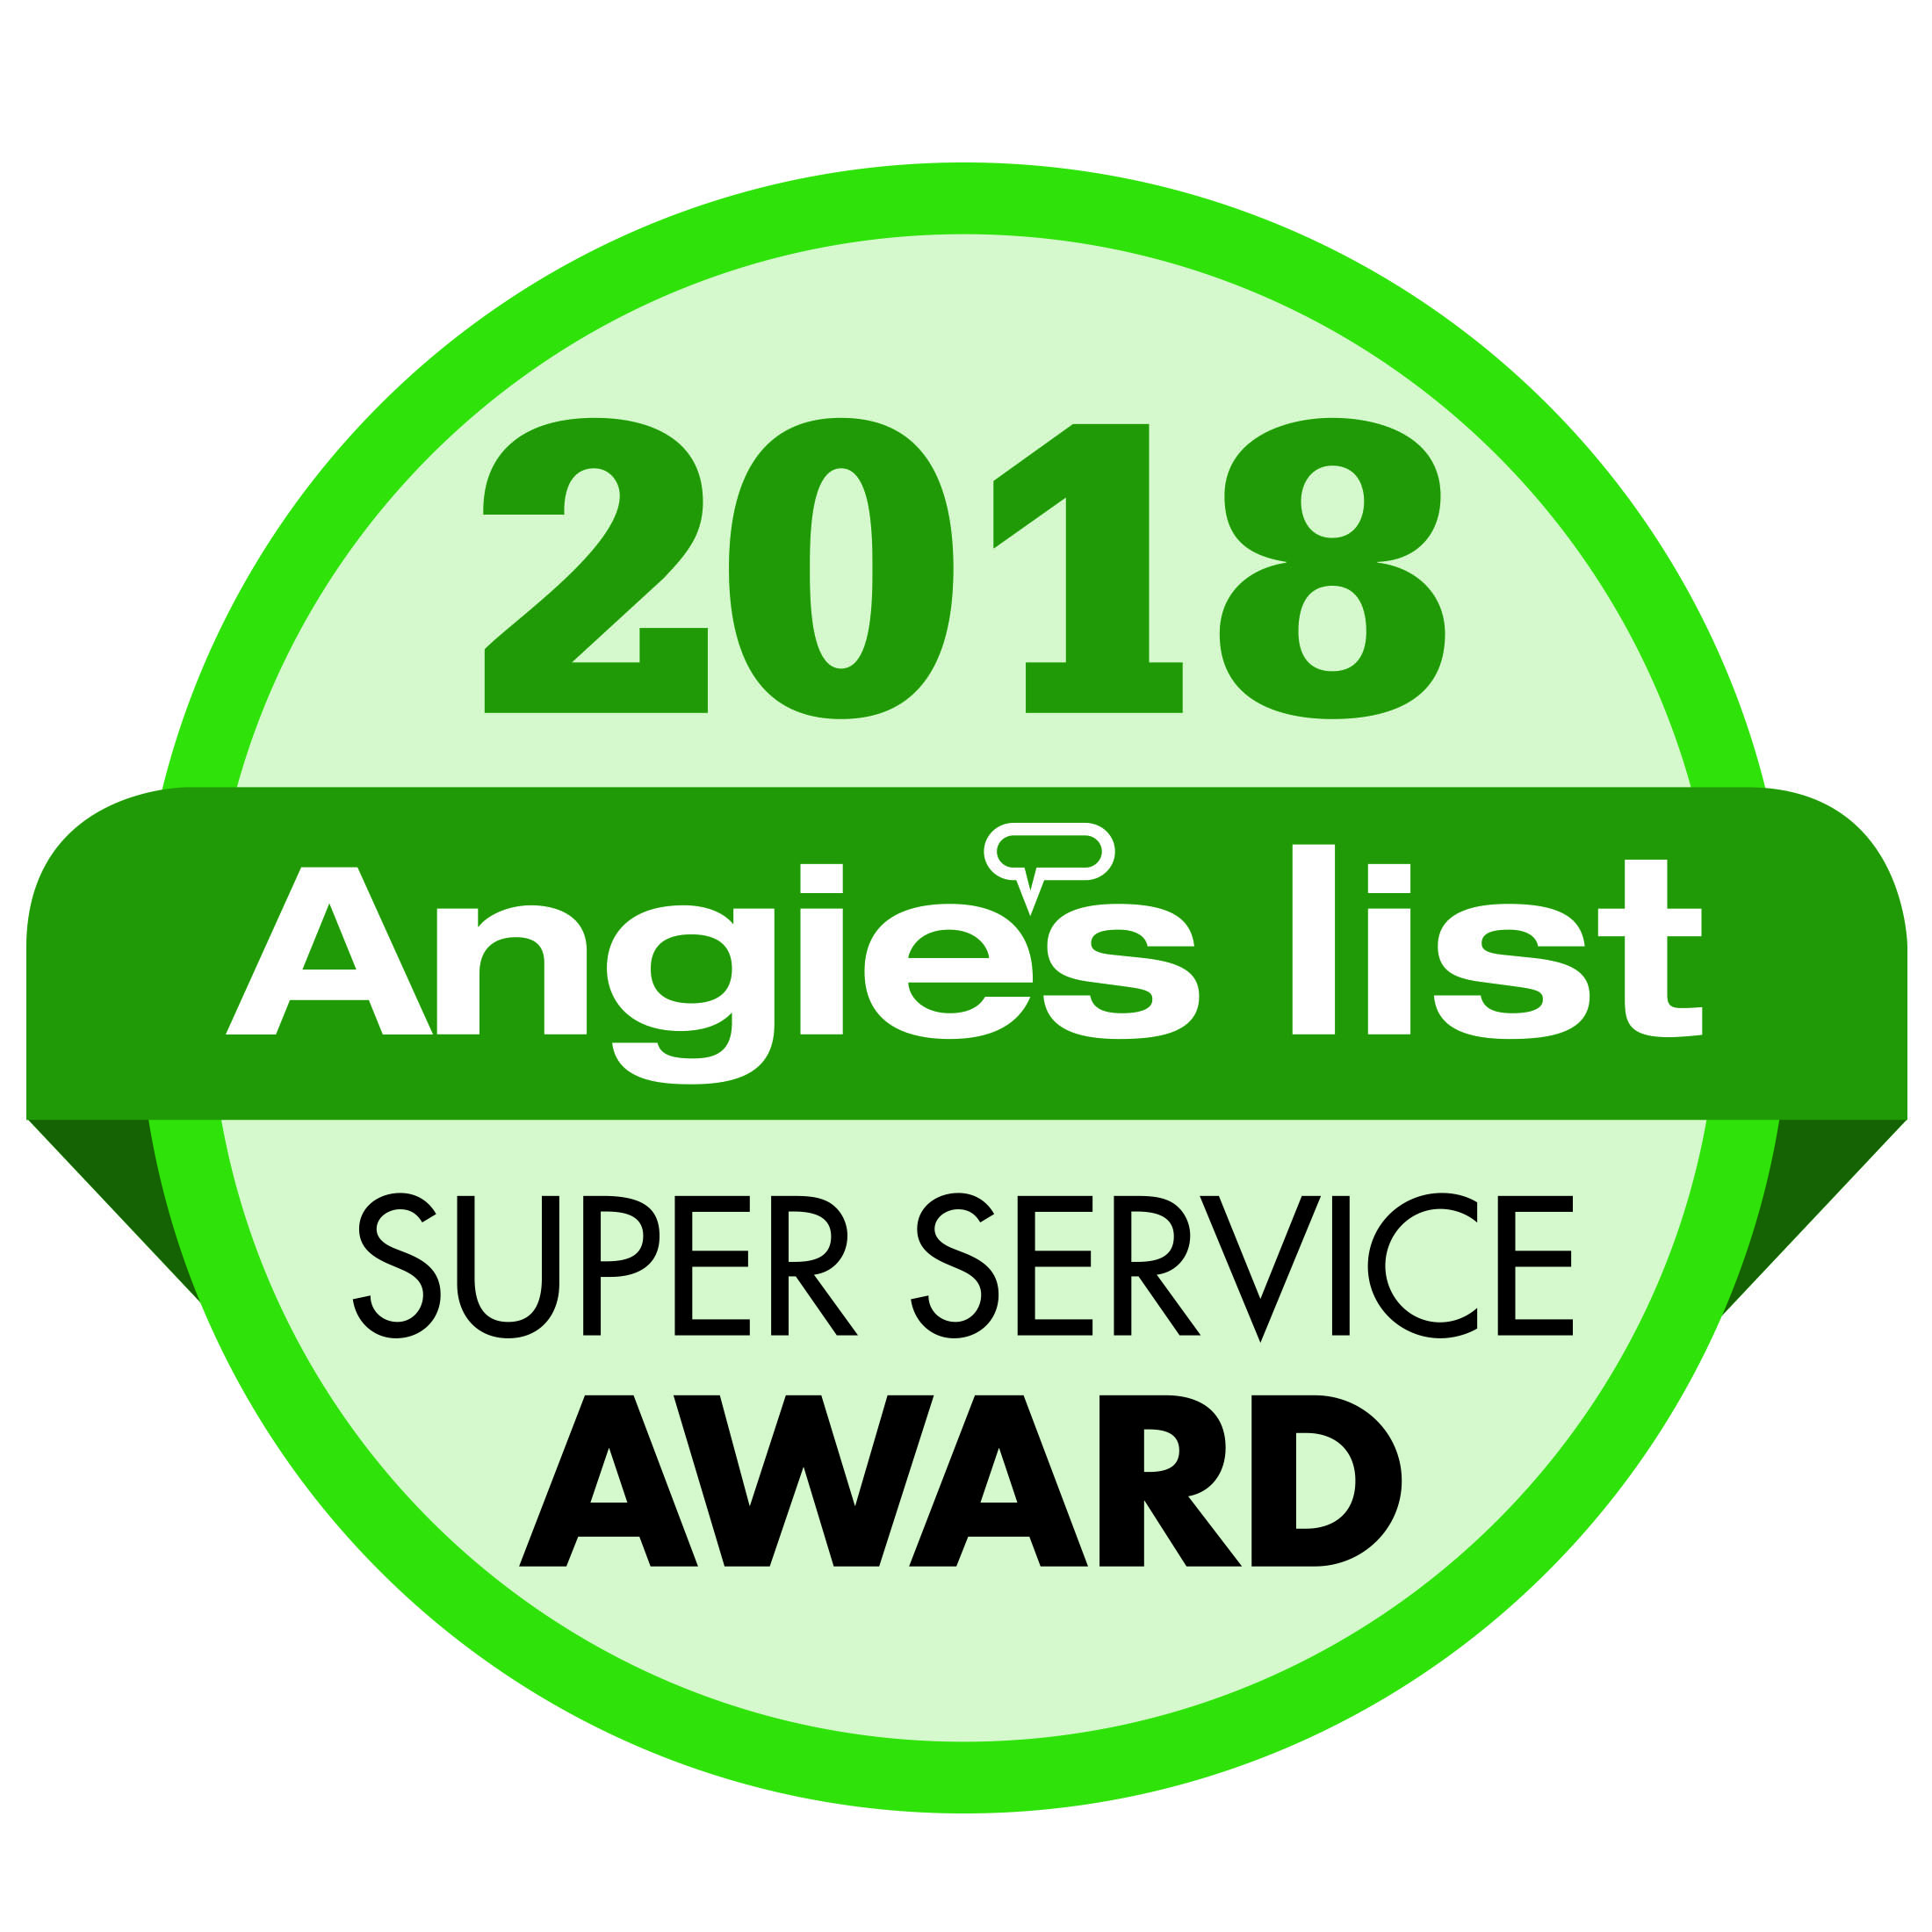 Paramount Tax & Accounting in Draper Earns 2018 Angie's List Super Service Award - Draper